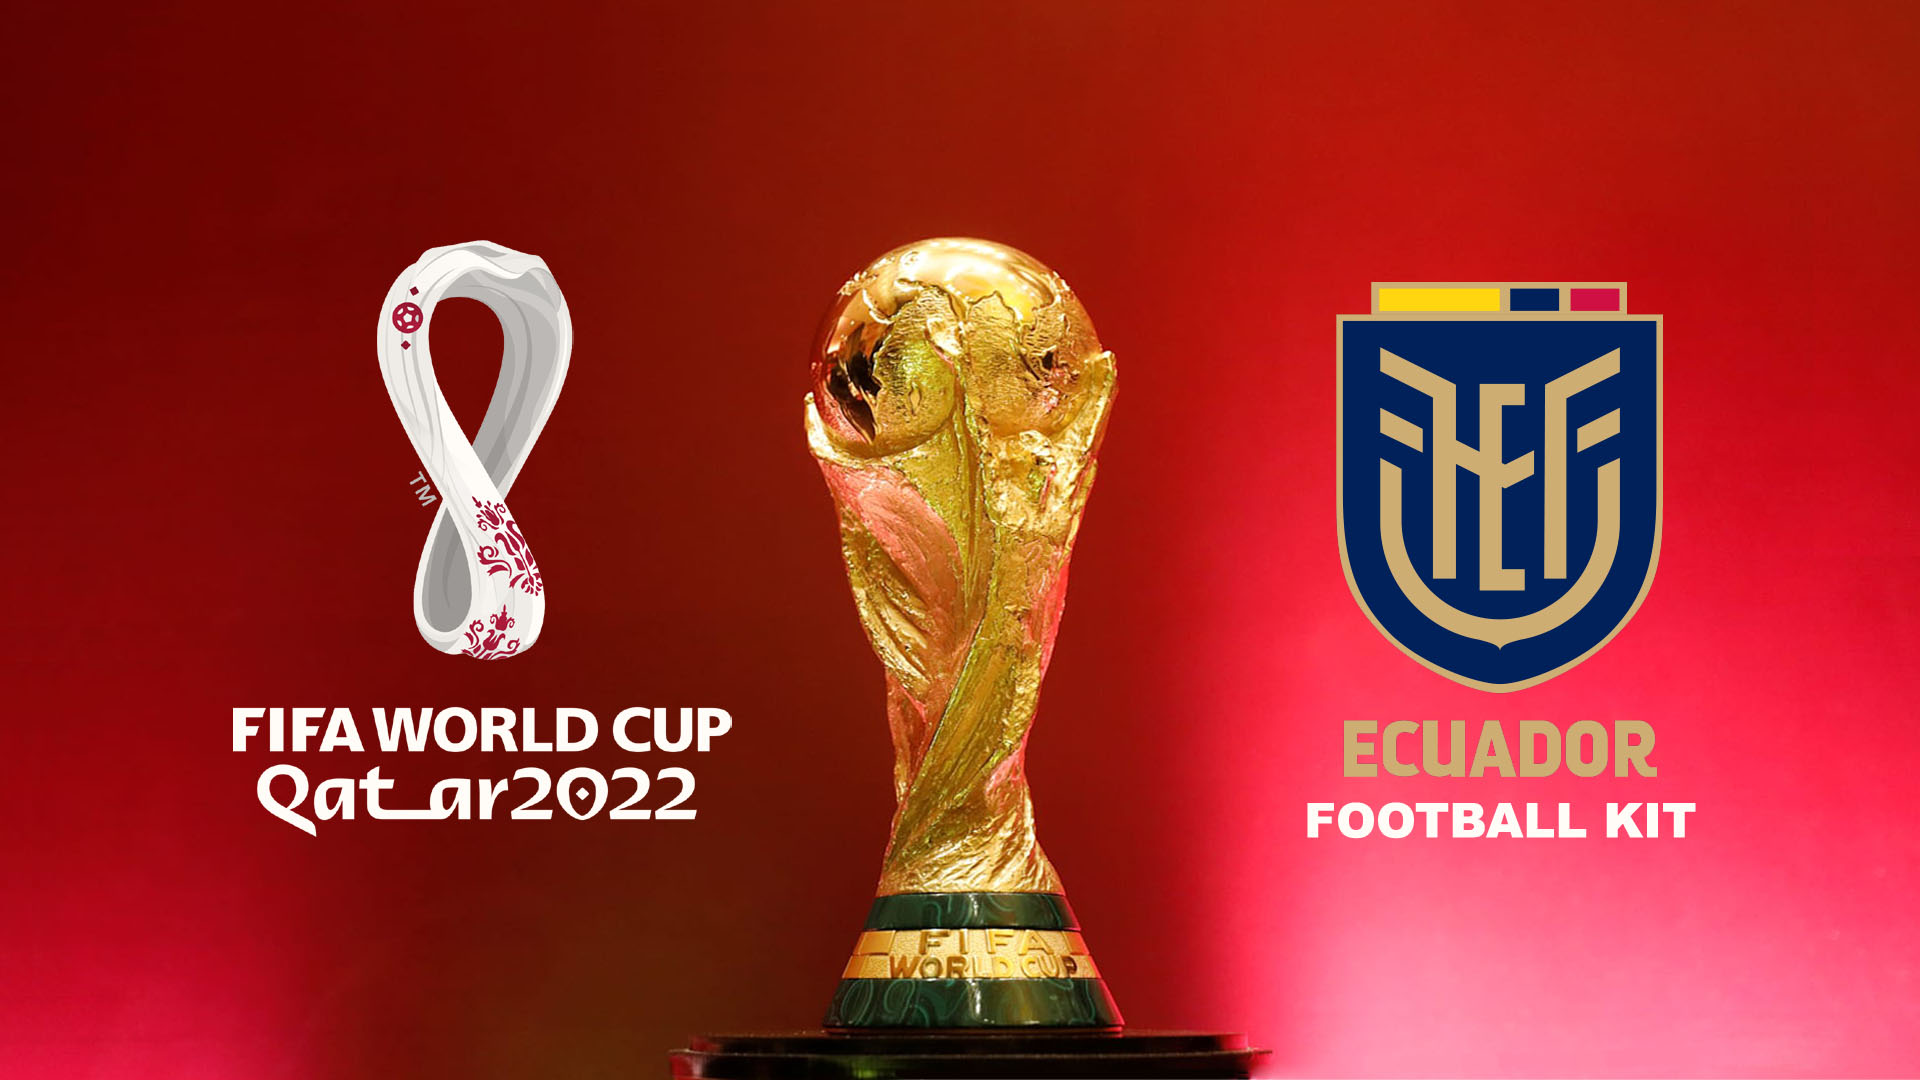 Ecuador Kit World Cup 2022